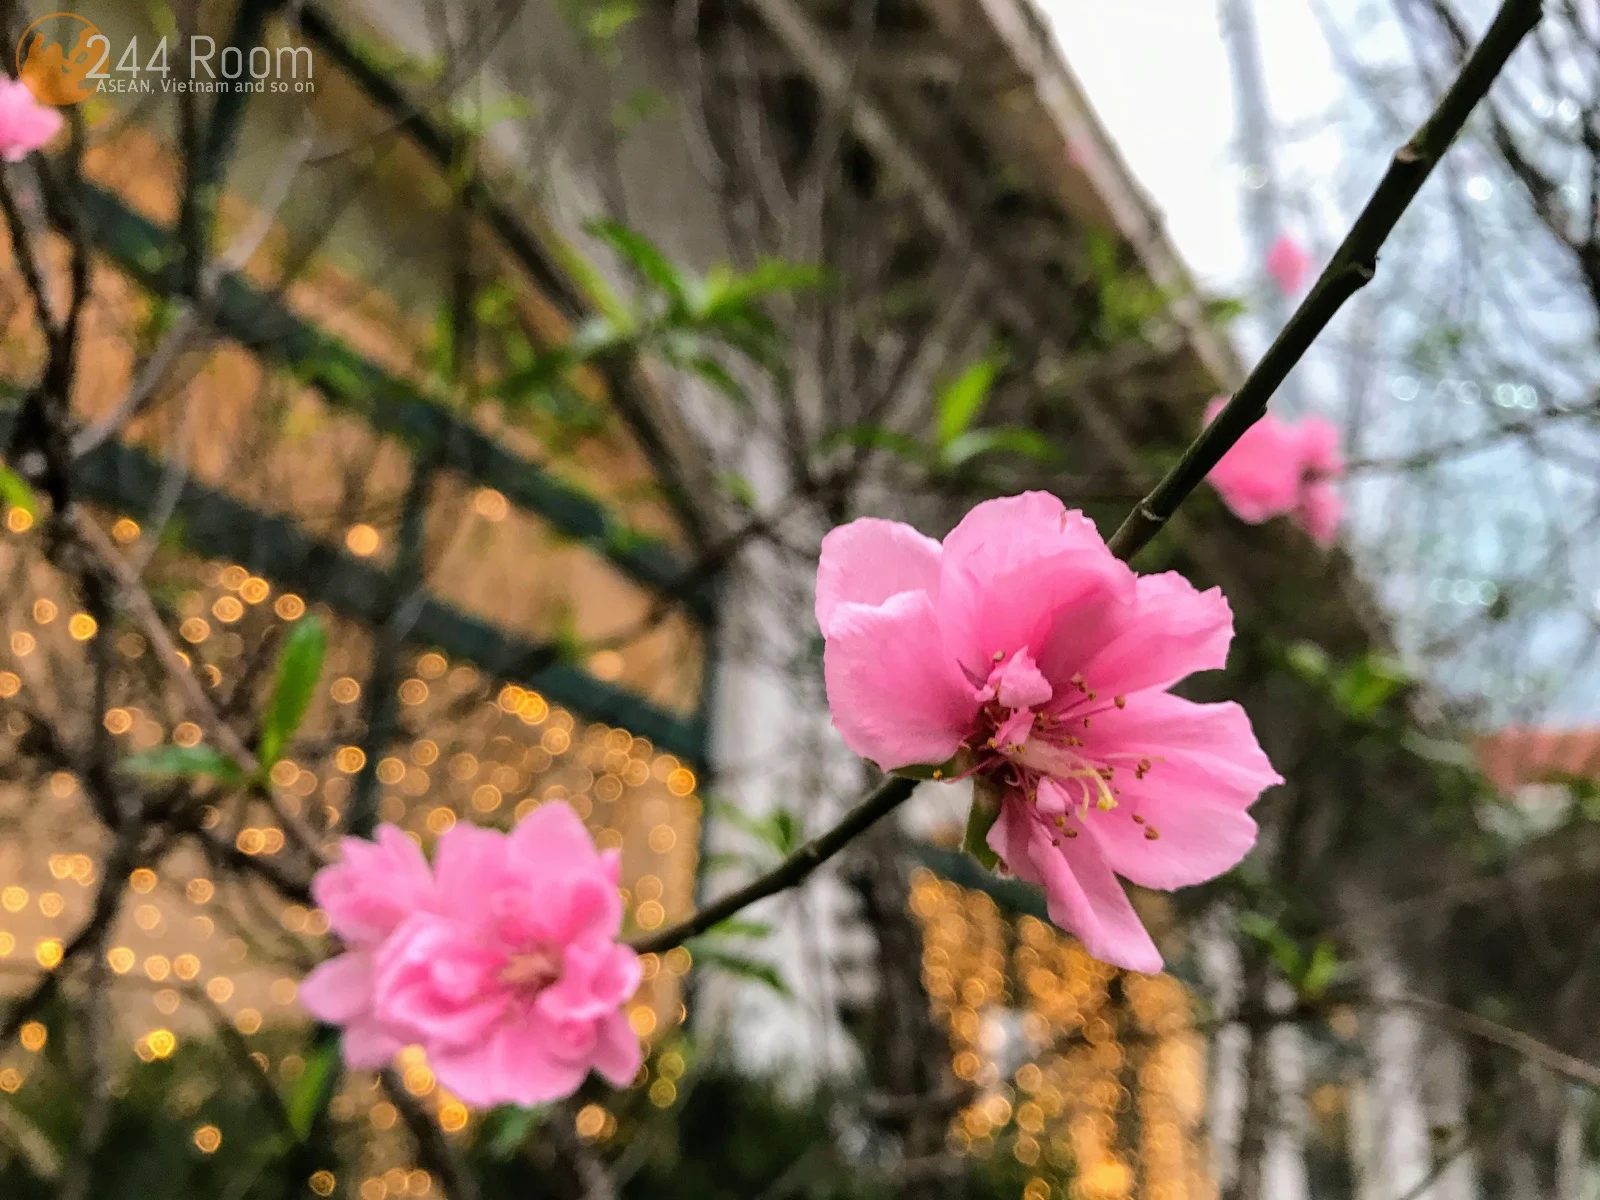 Peach-blossom-hanoi　ハノイの桃の花